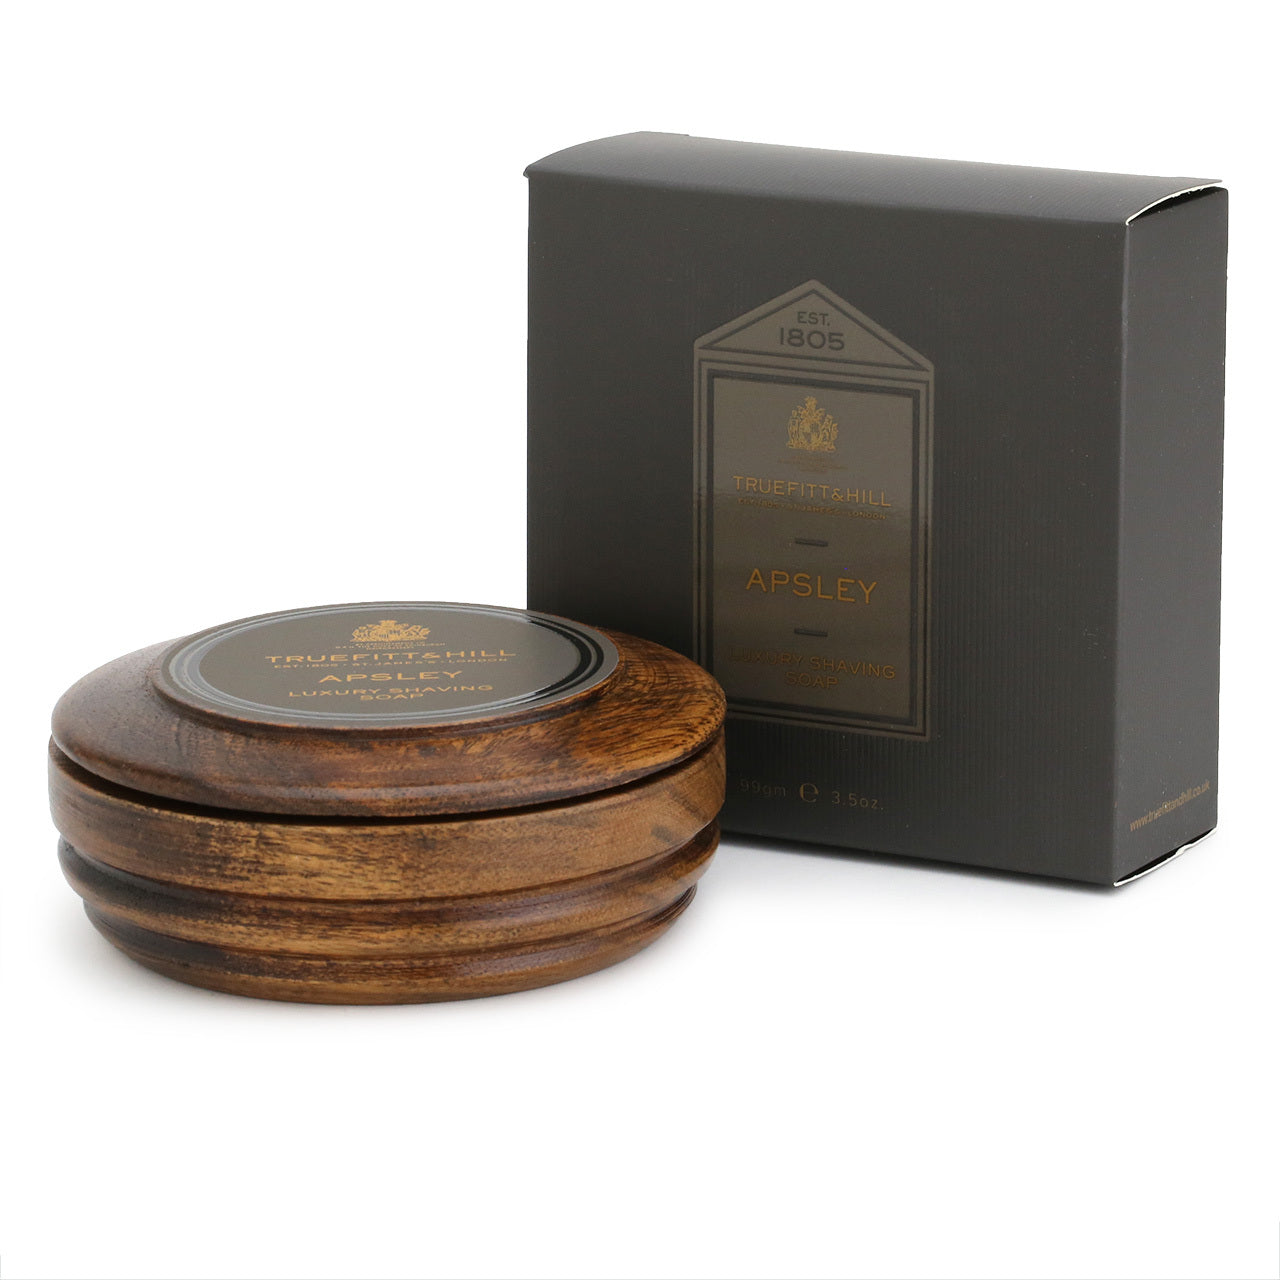 Truefitt & Hill Shaving Soap in a wooden bowl, Apsley scent.